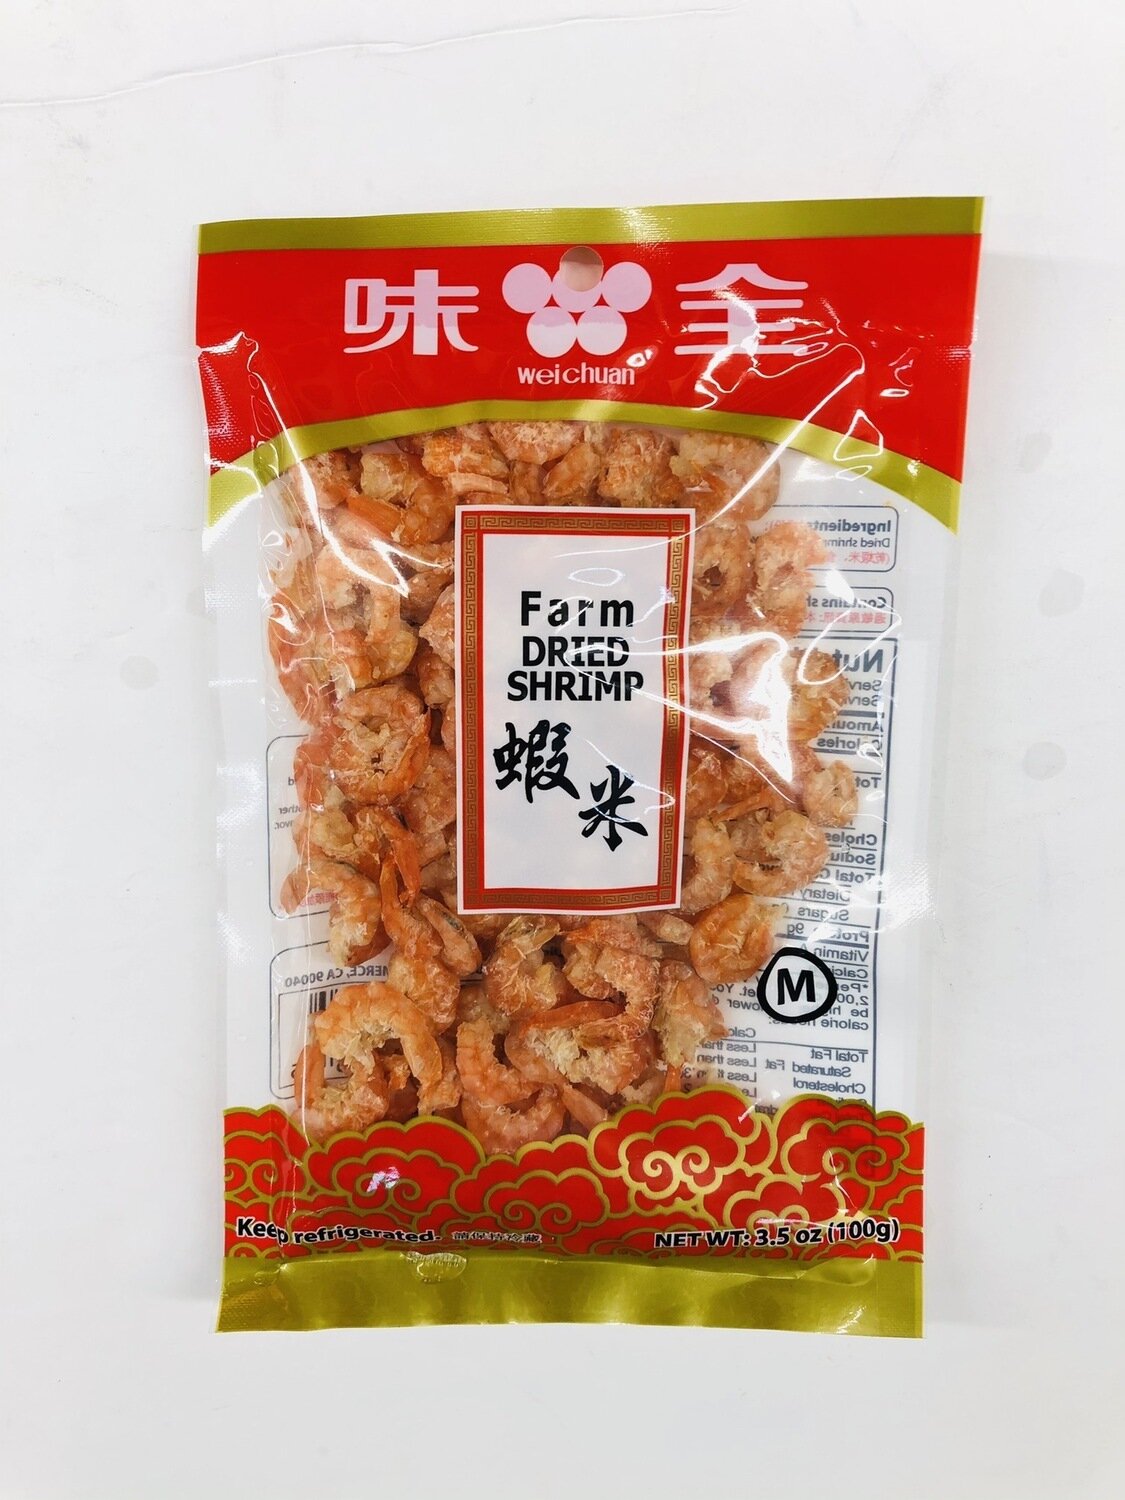 味全虾米 weichuan farm dried shrimp～3.5oz